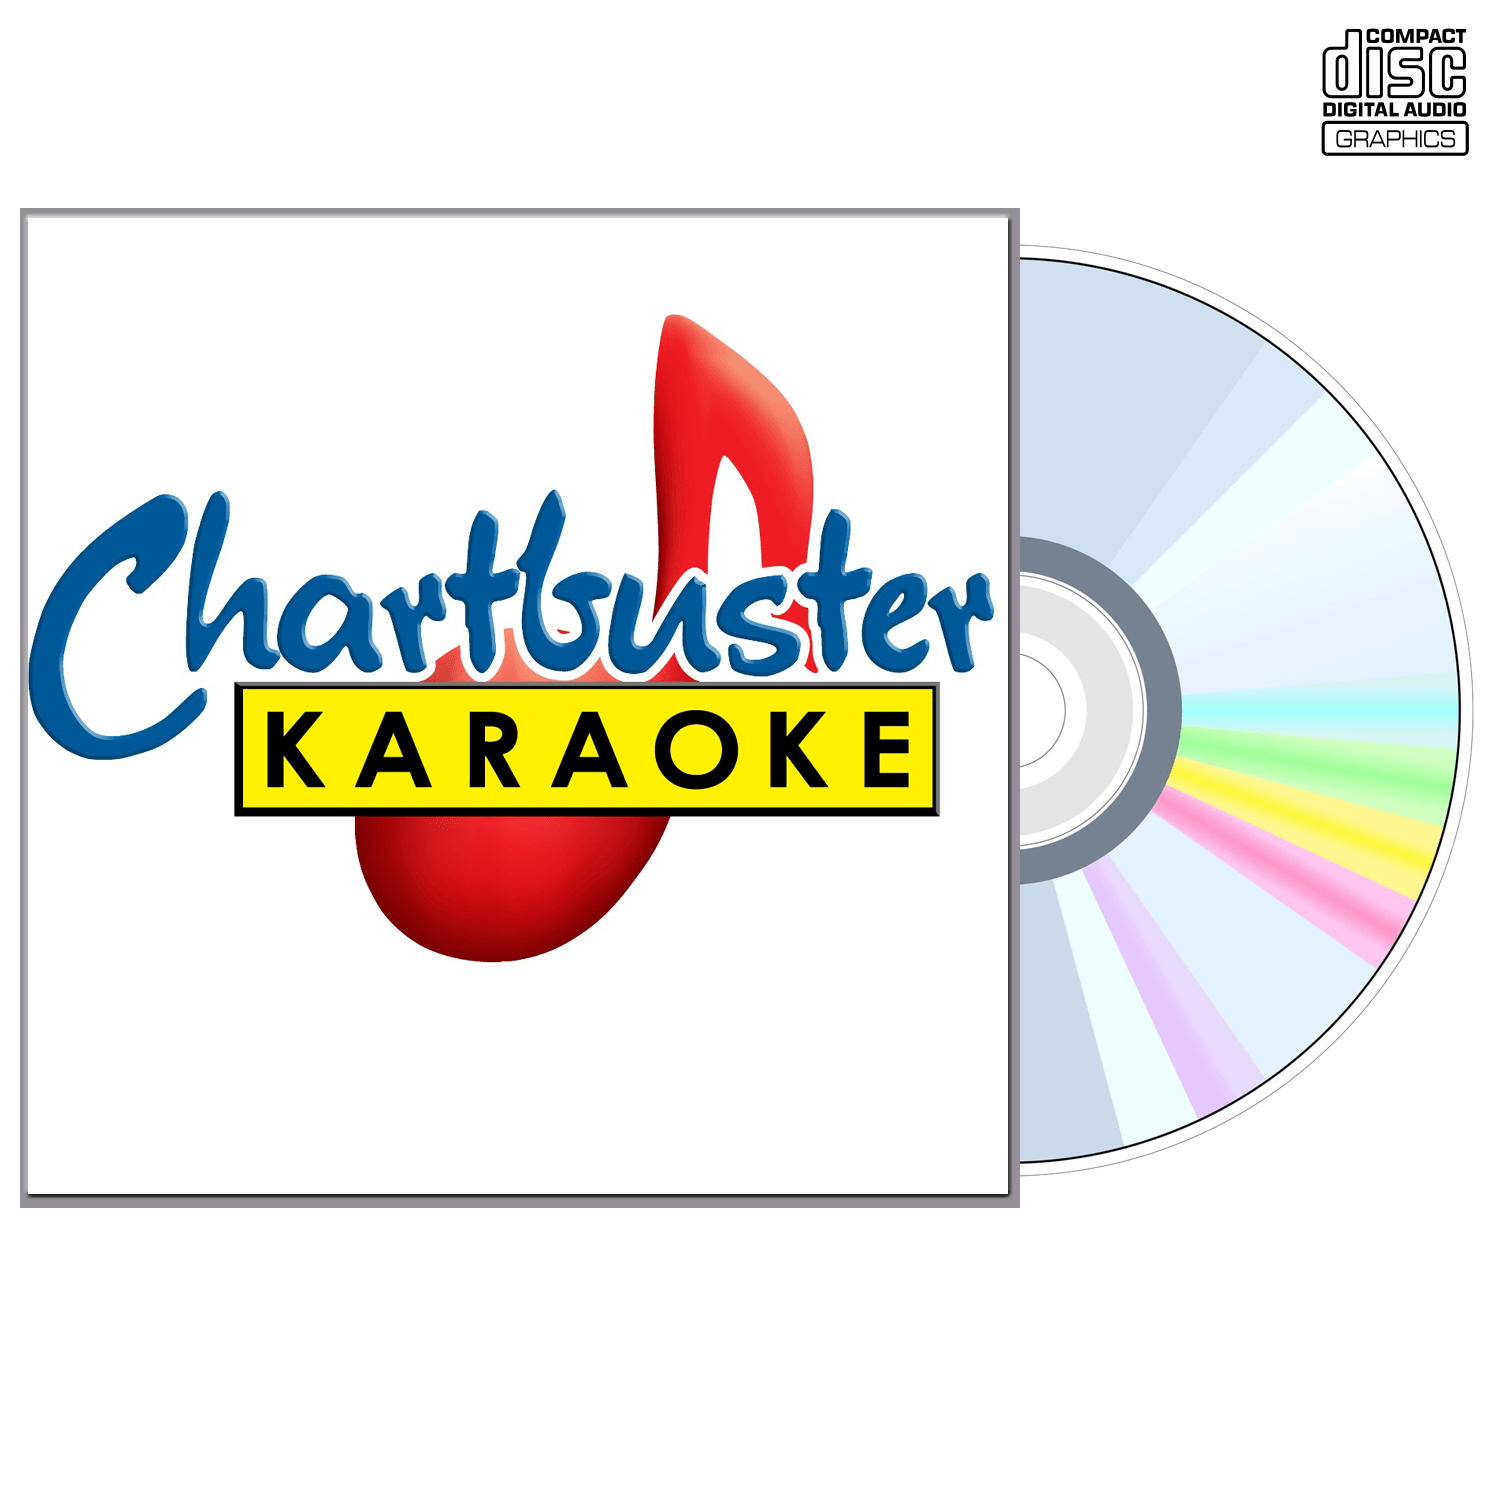 Sounds Of Sixties Vol 02 - CD+G - Chartbuster Karaoke - Karaoke Home Entertainment